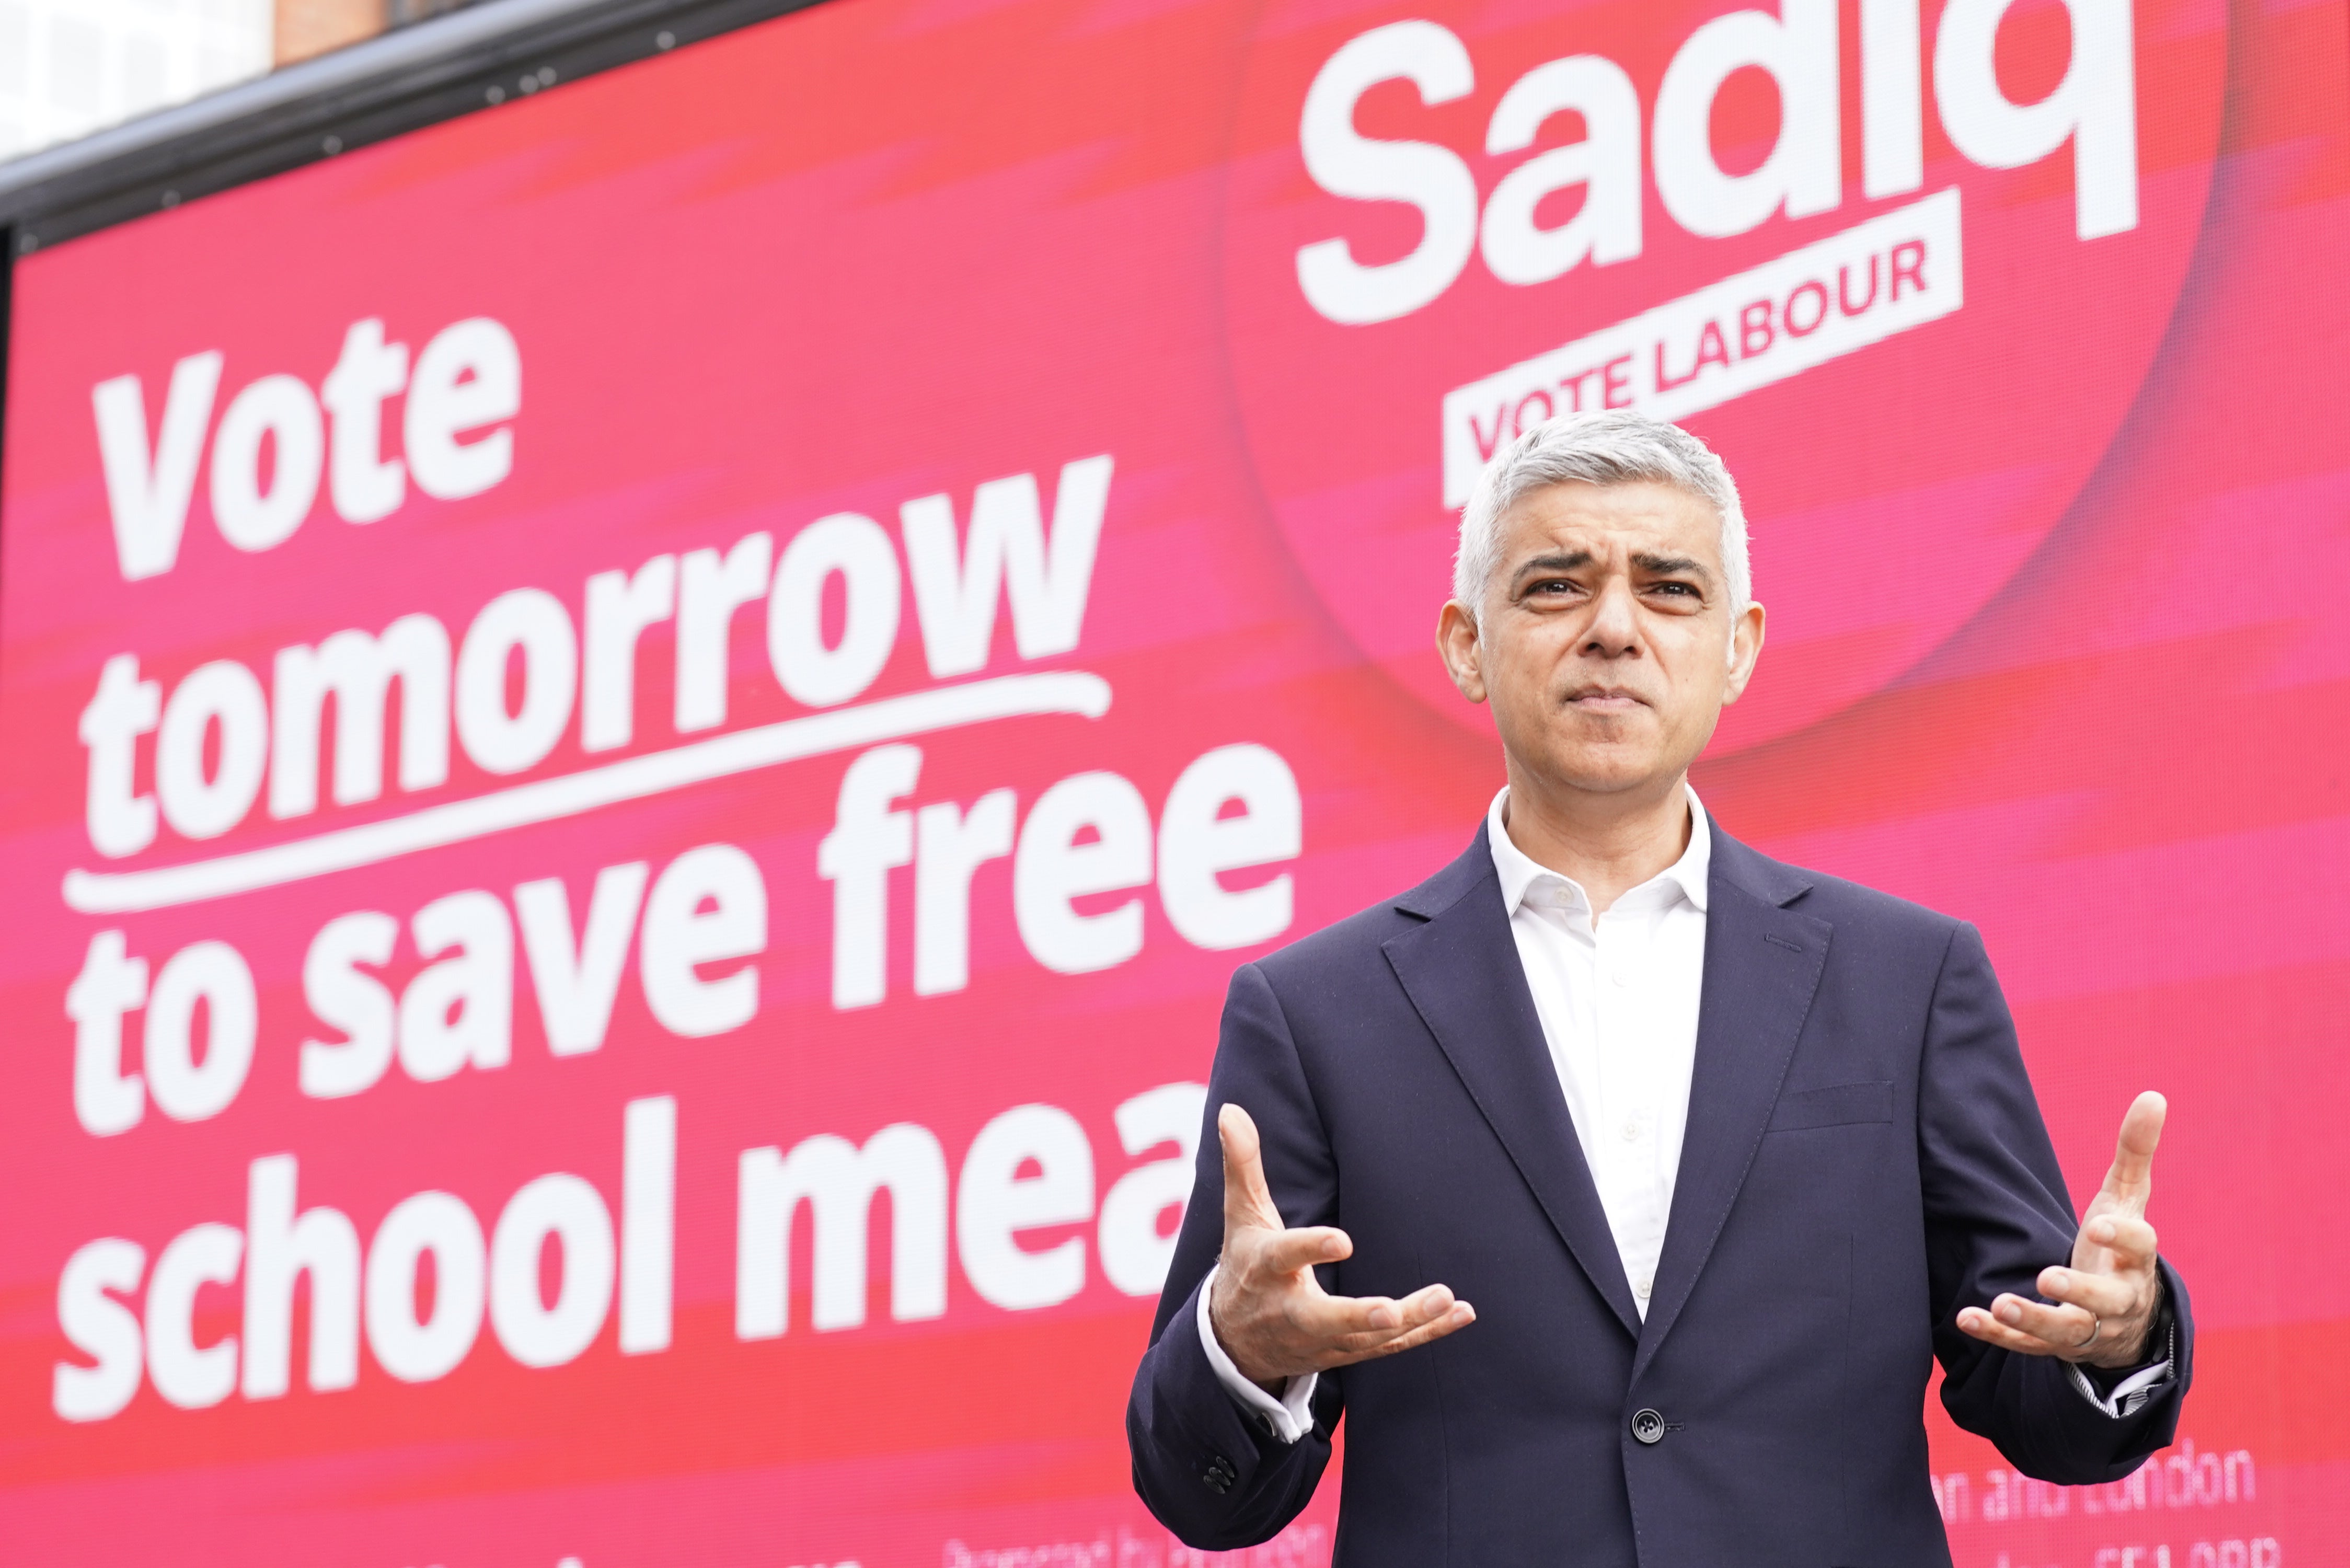 Sadiq Khan looks set to be re-elected as London mayor